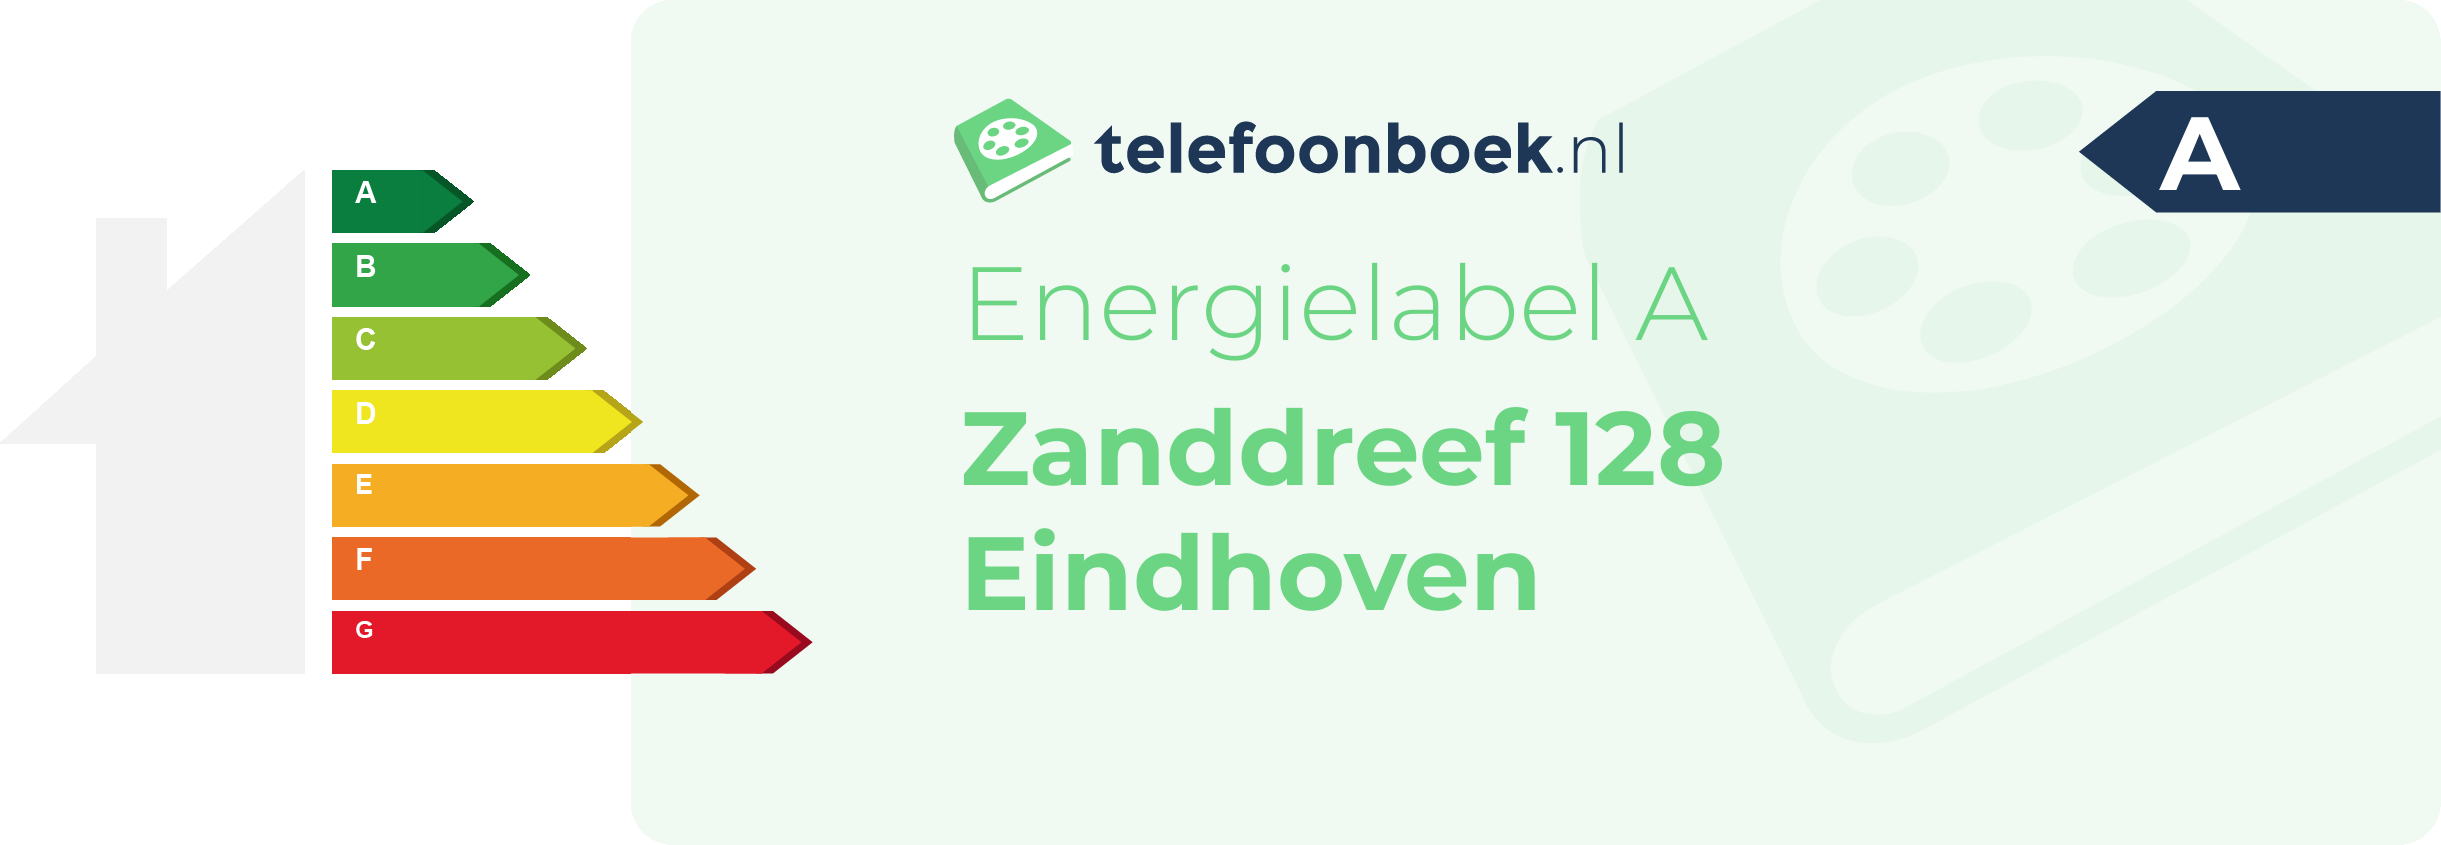 Energielabel Zanddreef 128 Eindhoven